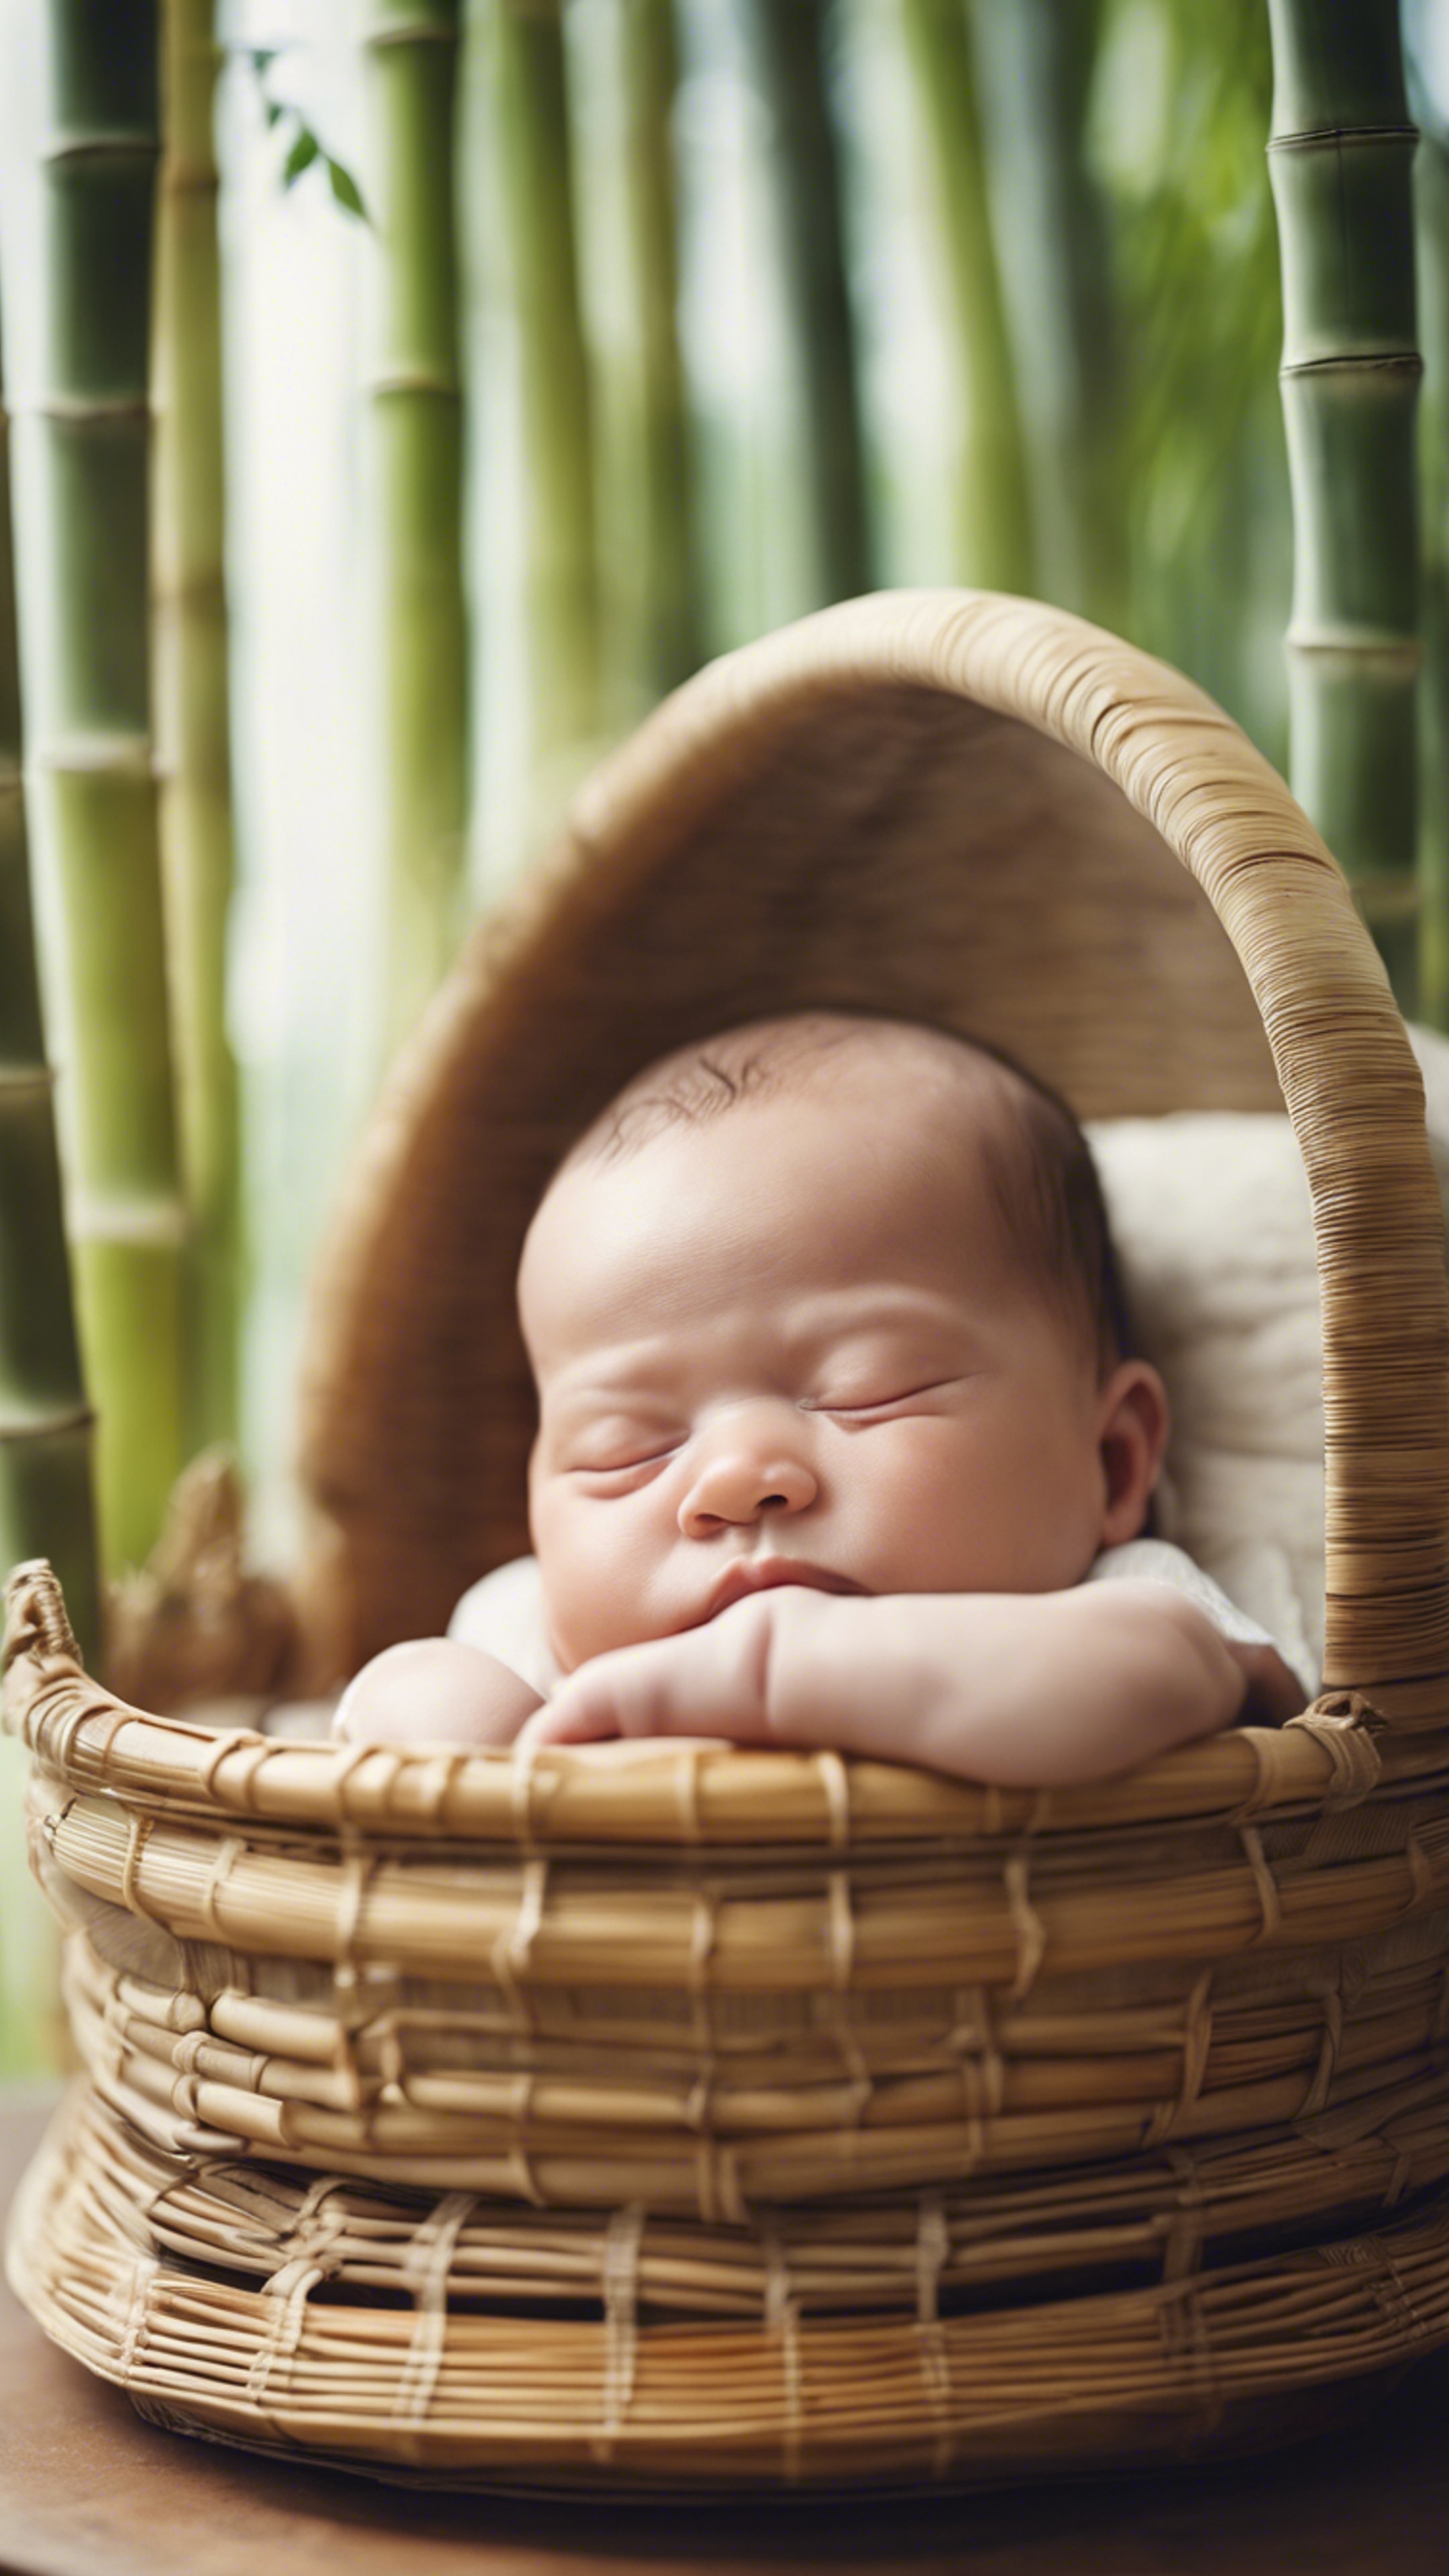 A newborn baby sleeping peacefully in a bamboo cradle. Papel de parede[aa600c14ac9b4a439482]